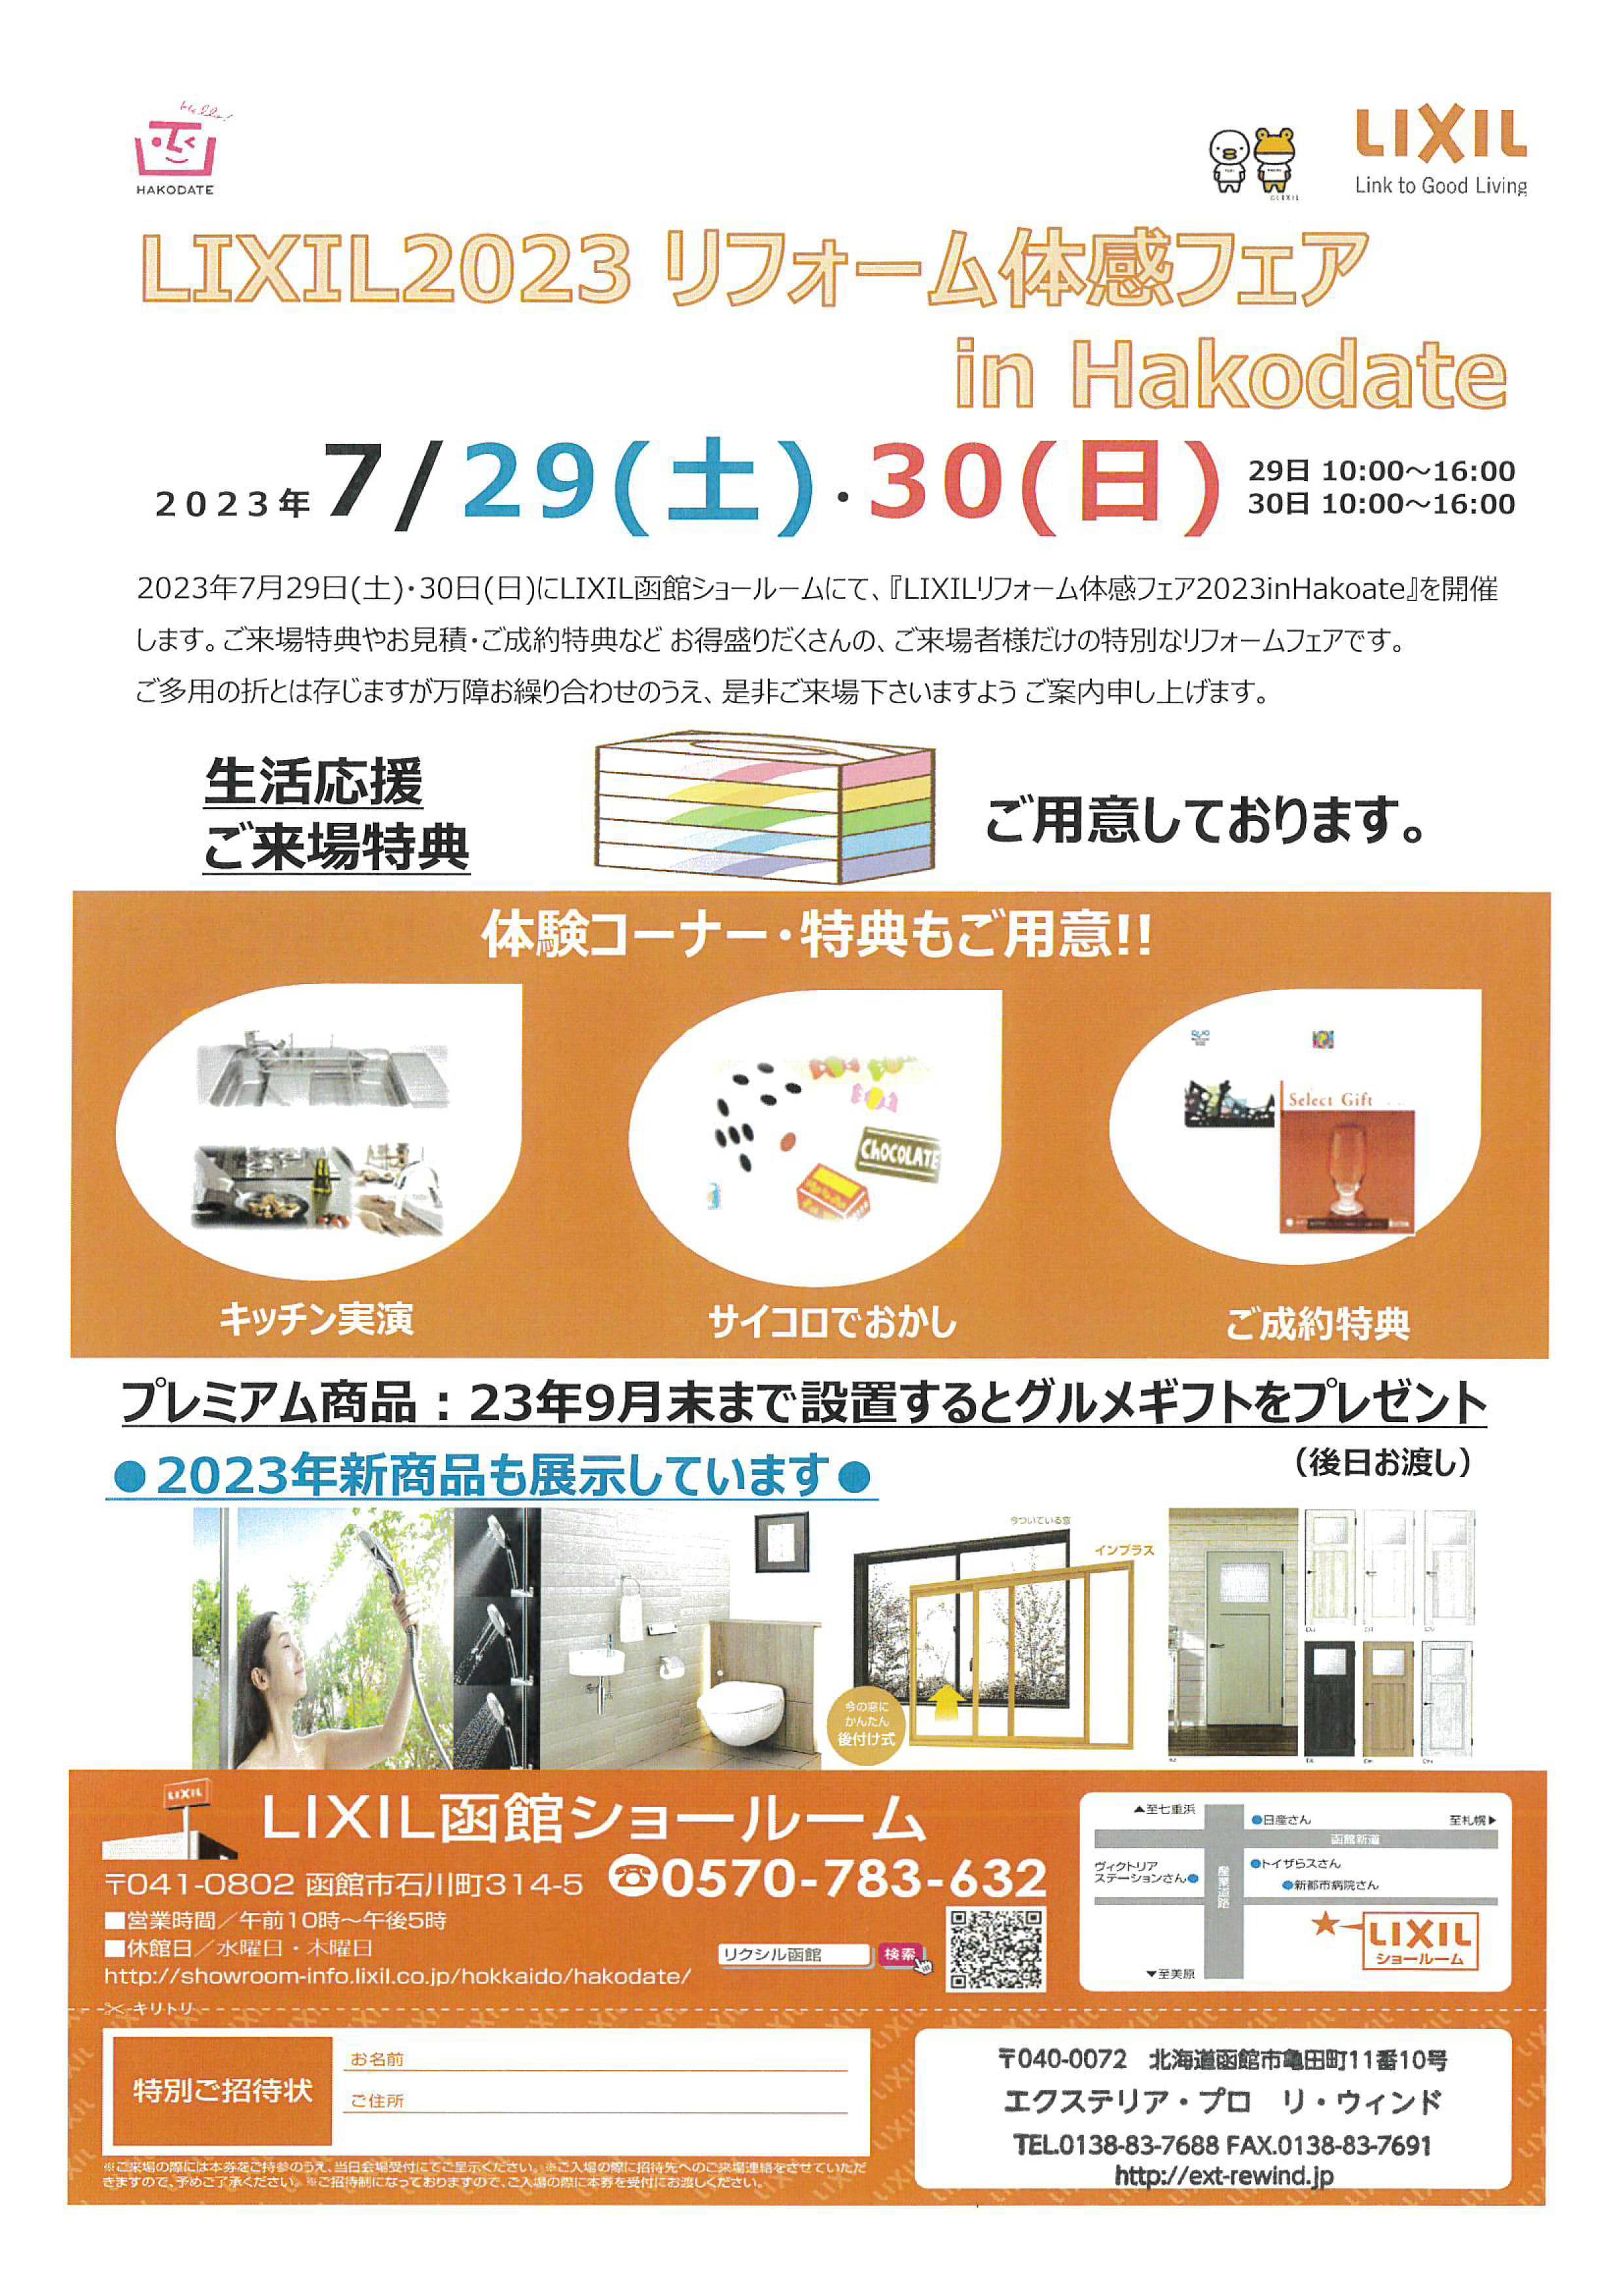 LIXIL2023 リフォーム体感フェア in Hakodate リ・ウィンドのイベントキャンペーン 写真8